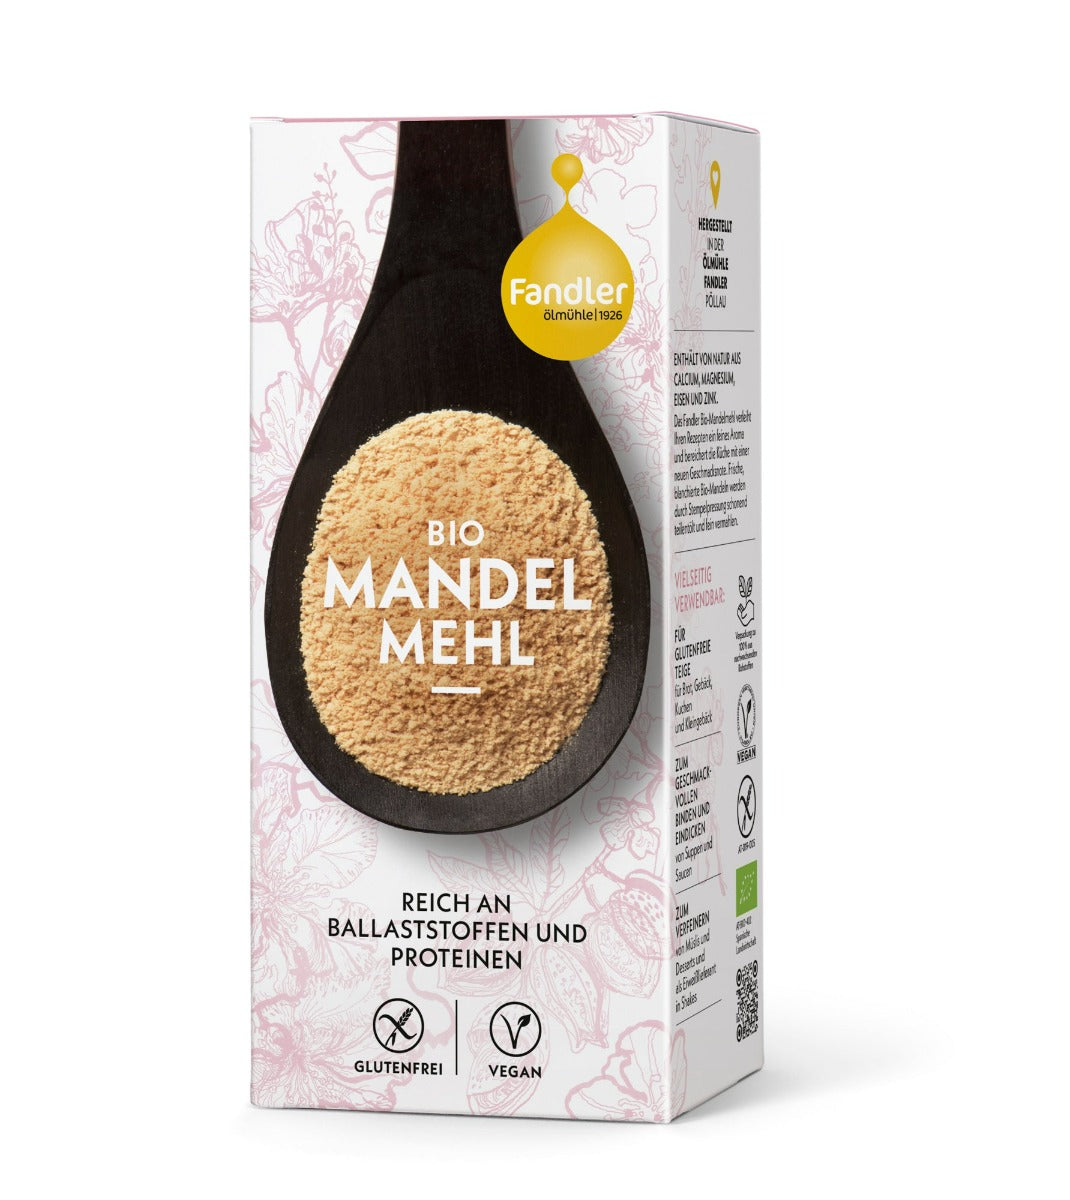 FANDLER Mandelmehl - 400 g 